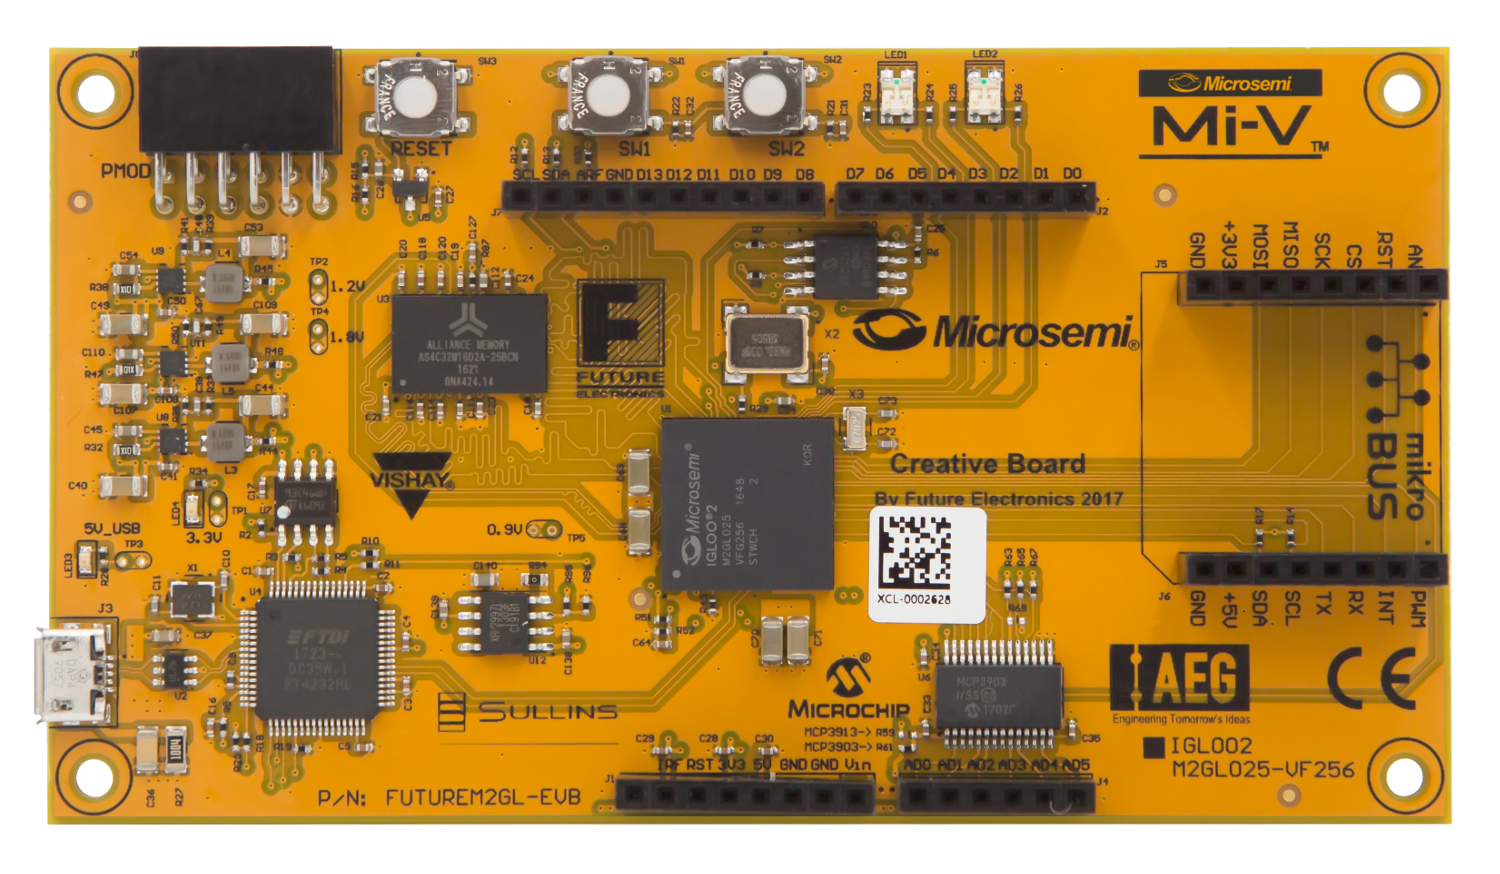 RISC-V soft CPU cores can be implemented on FPGA boards like Microsemi’s 25K LUT IGLOO2 RISC-V Creative Development Board. Source: Microsemi